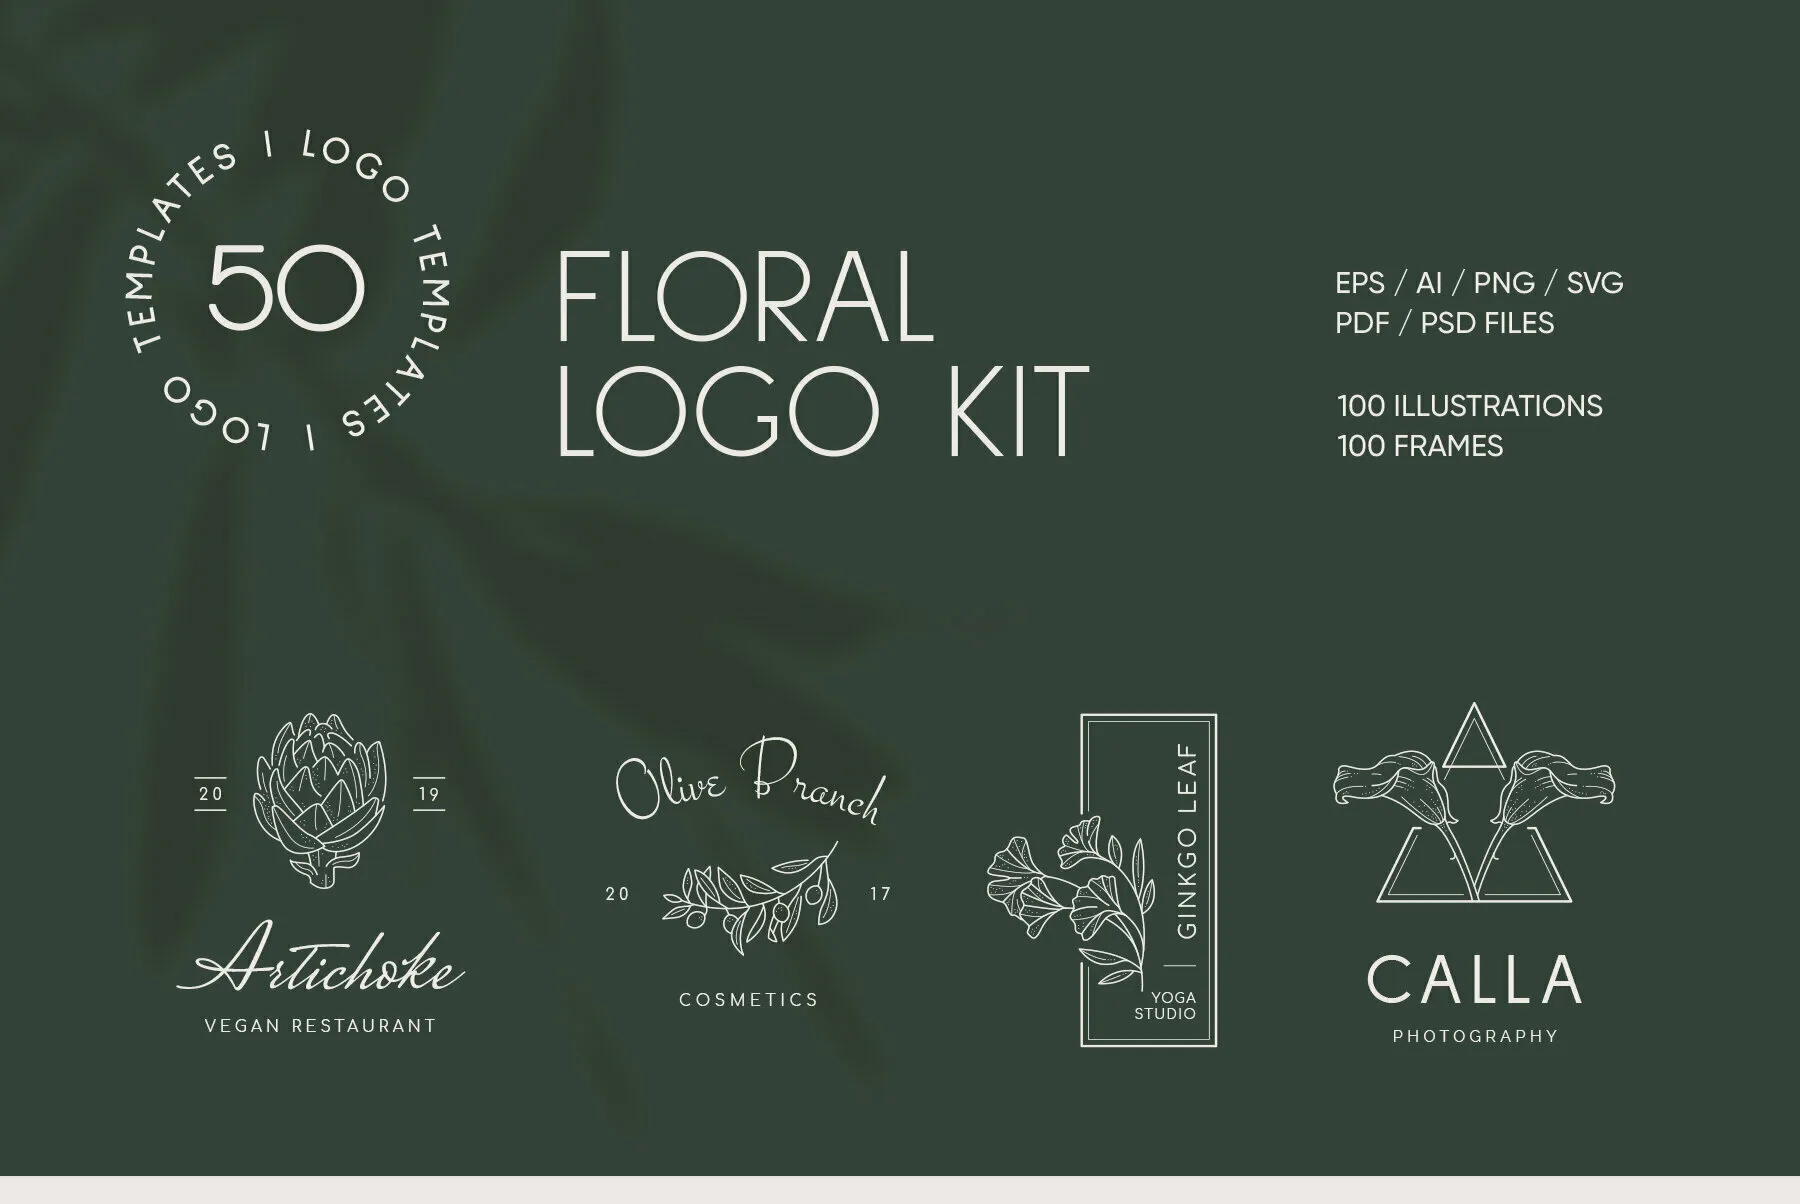 Floral Branding Kit 